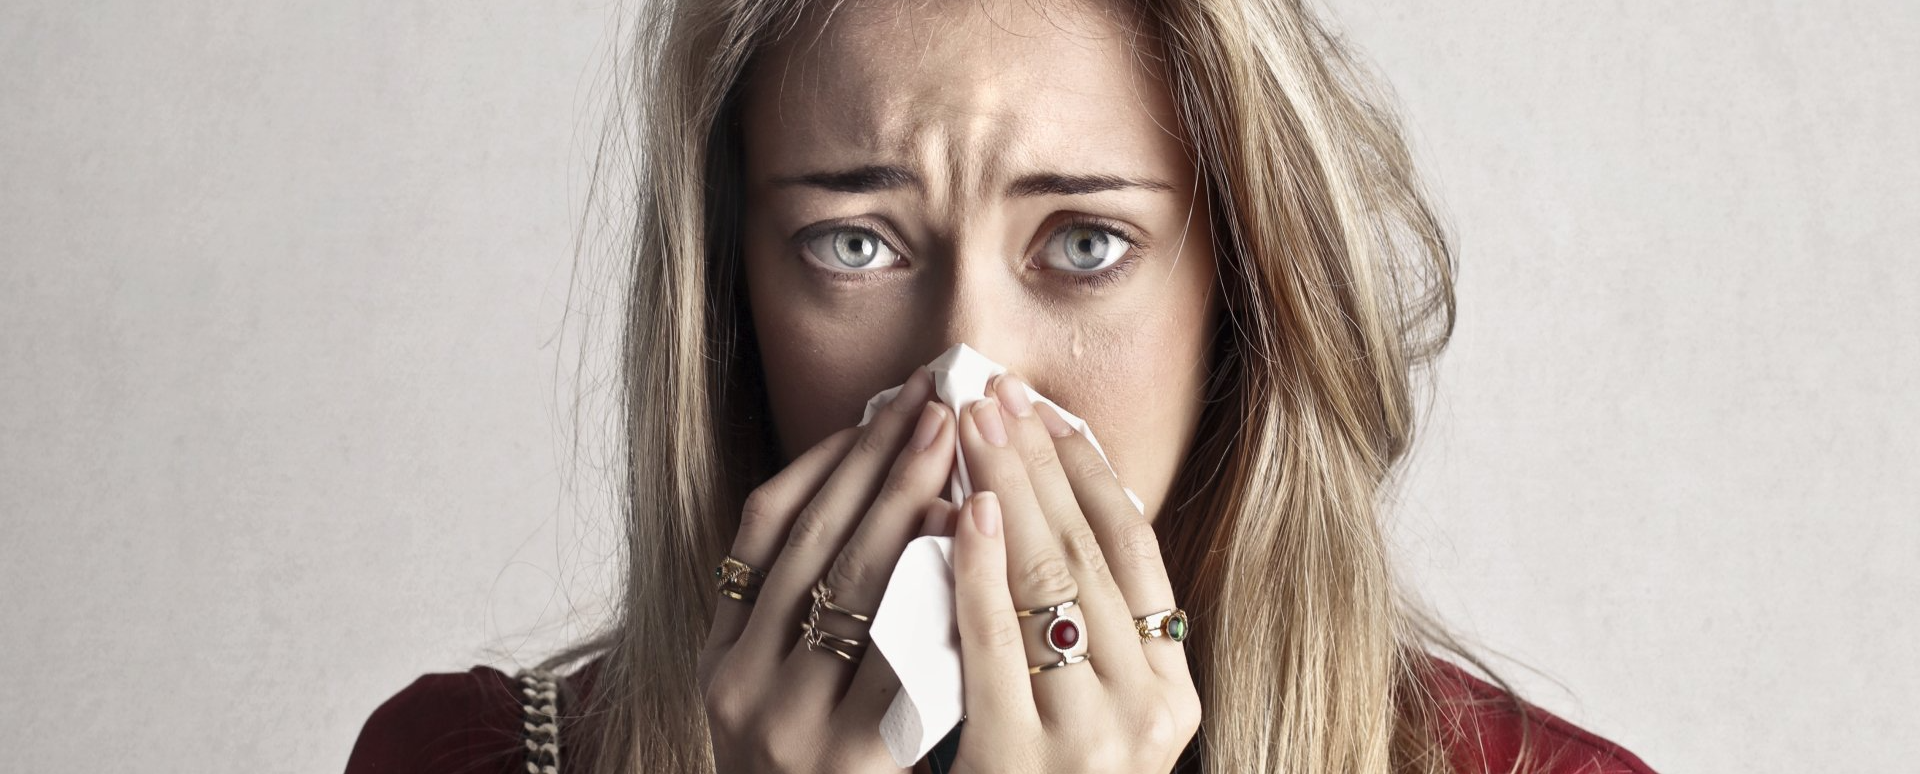 Tips to Keep Clean During Flu Season